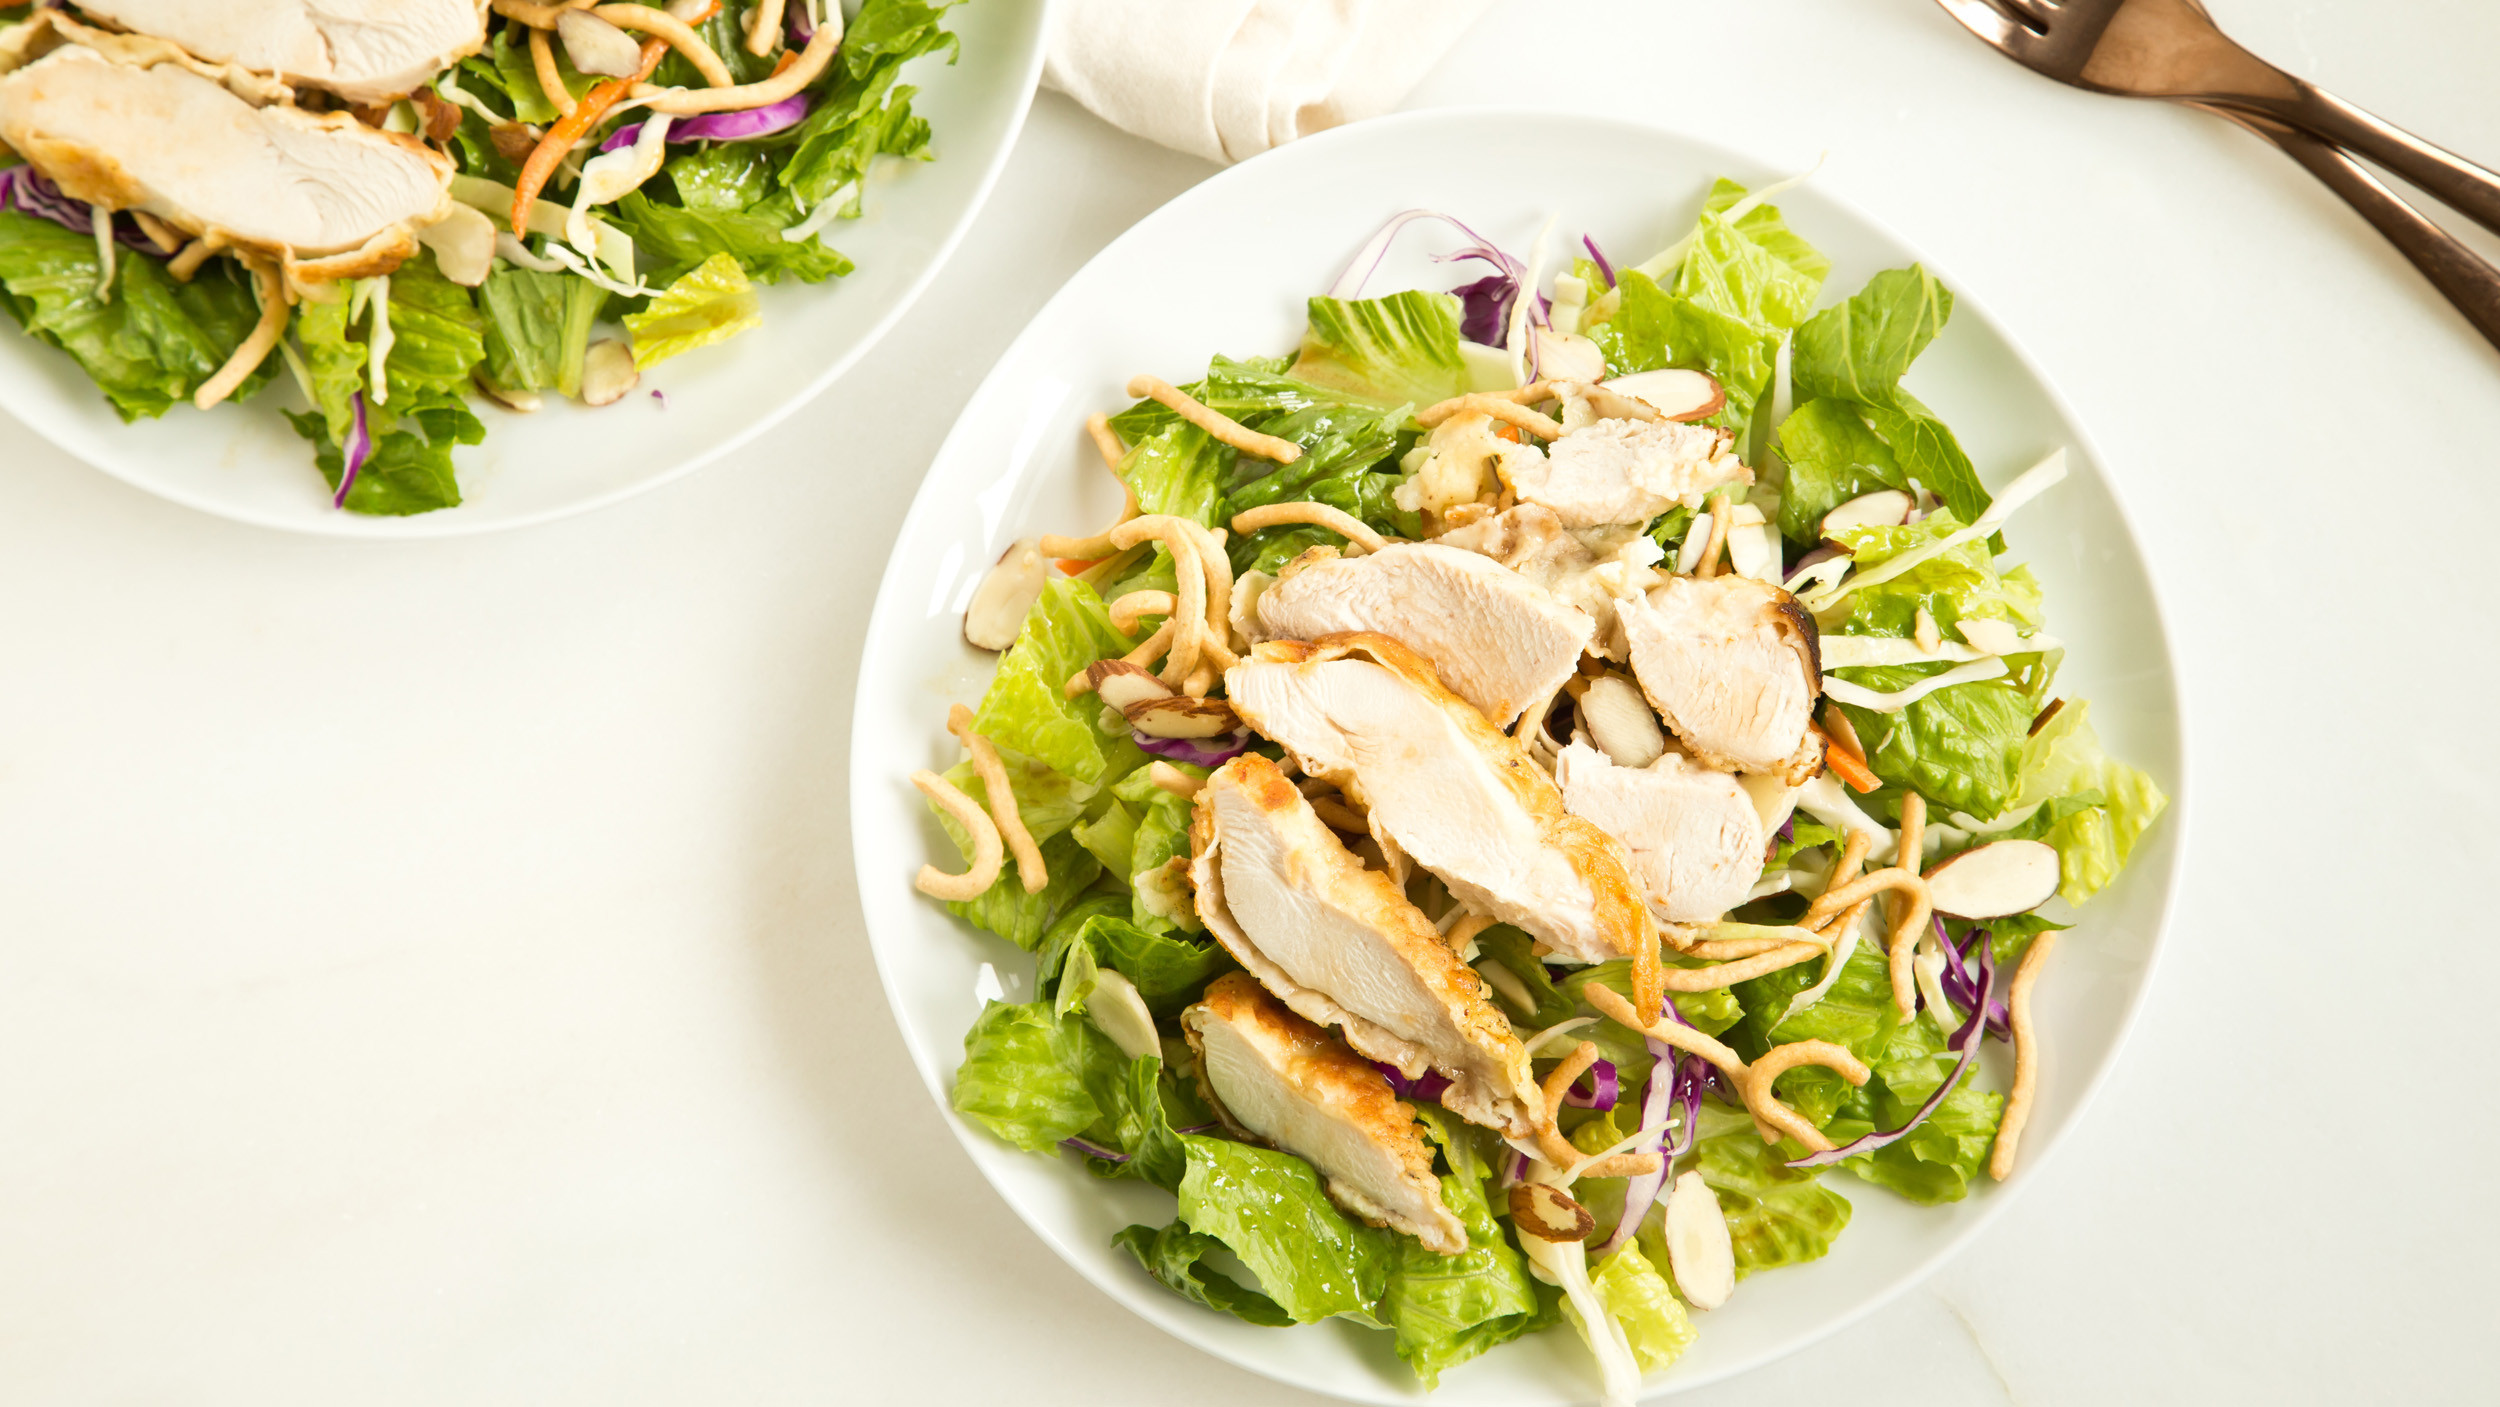 Asian Salad Recipes
 Make ahead Asian chicken salad recipe inspired by Applebee